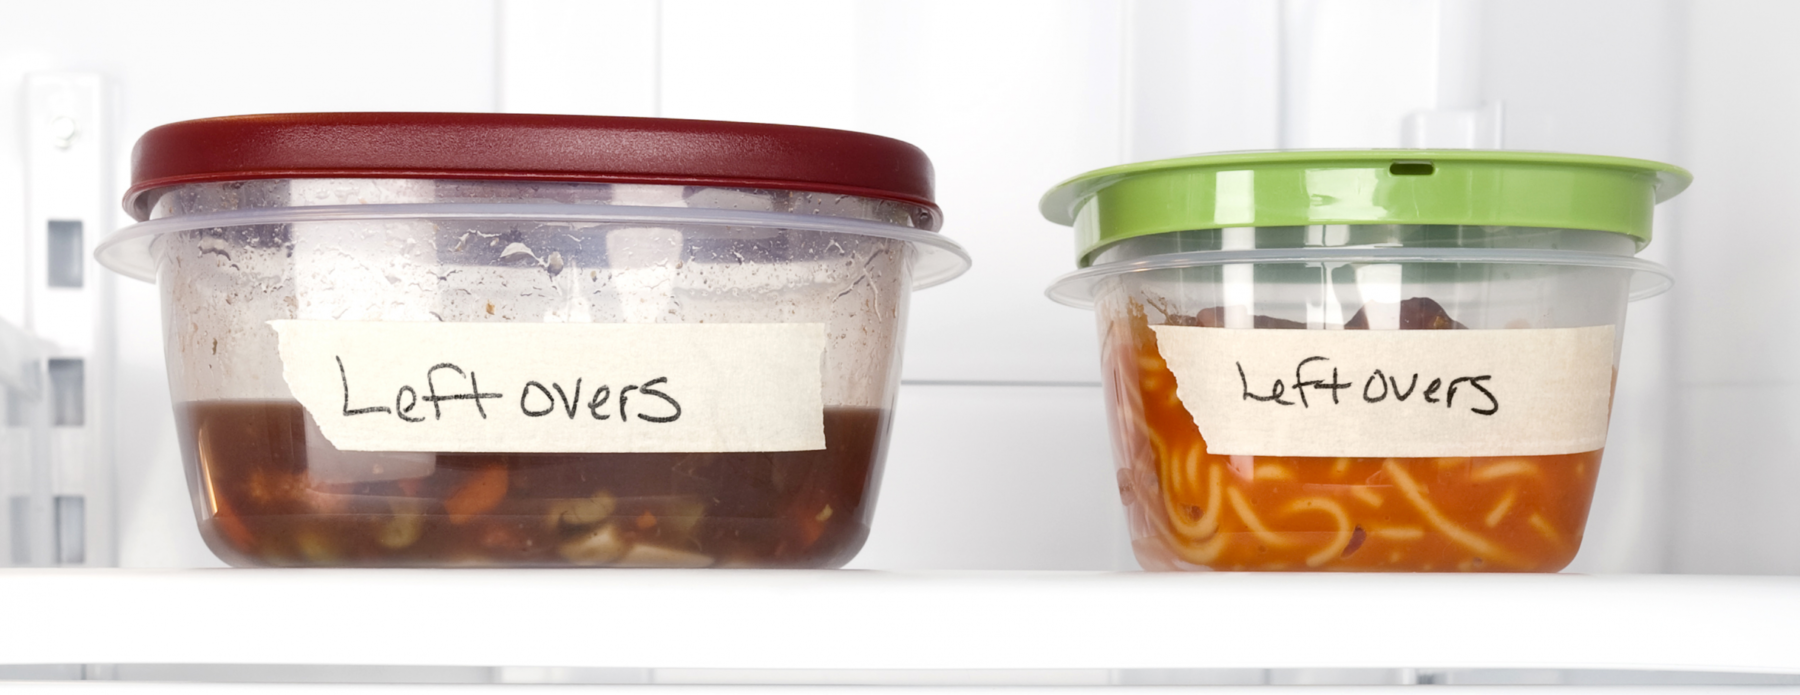 Photo: Leftovers in refrigerator.